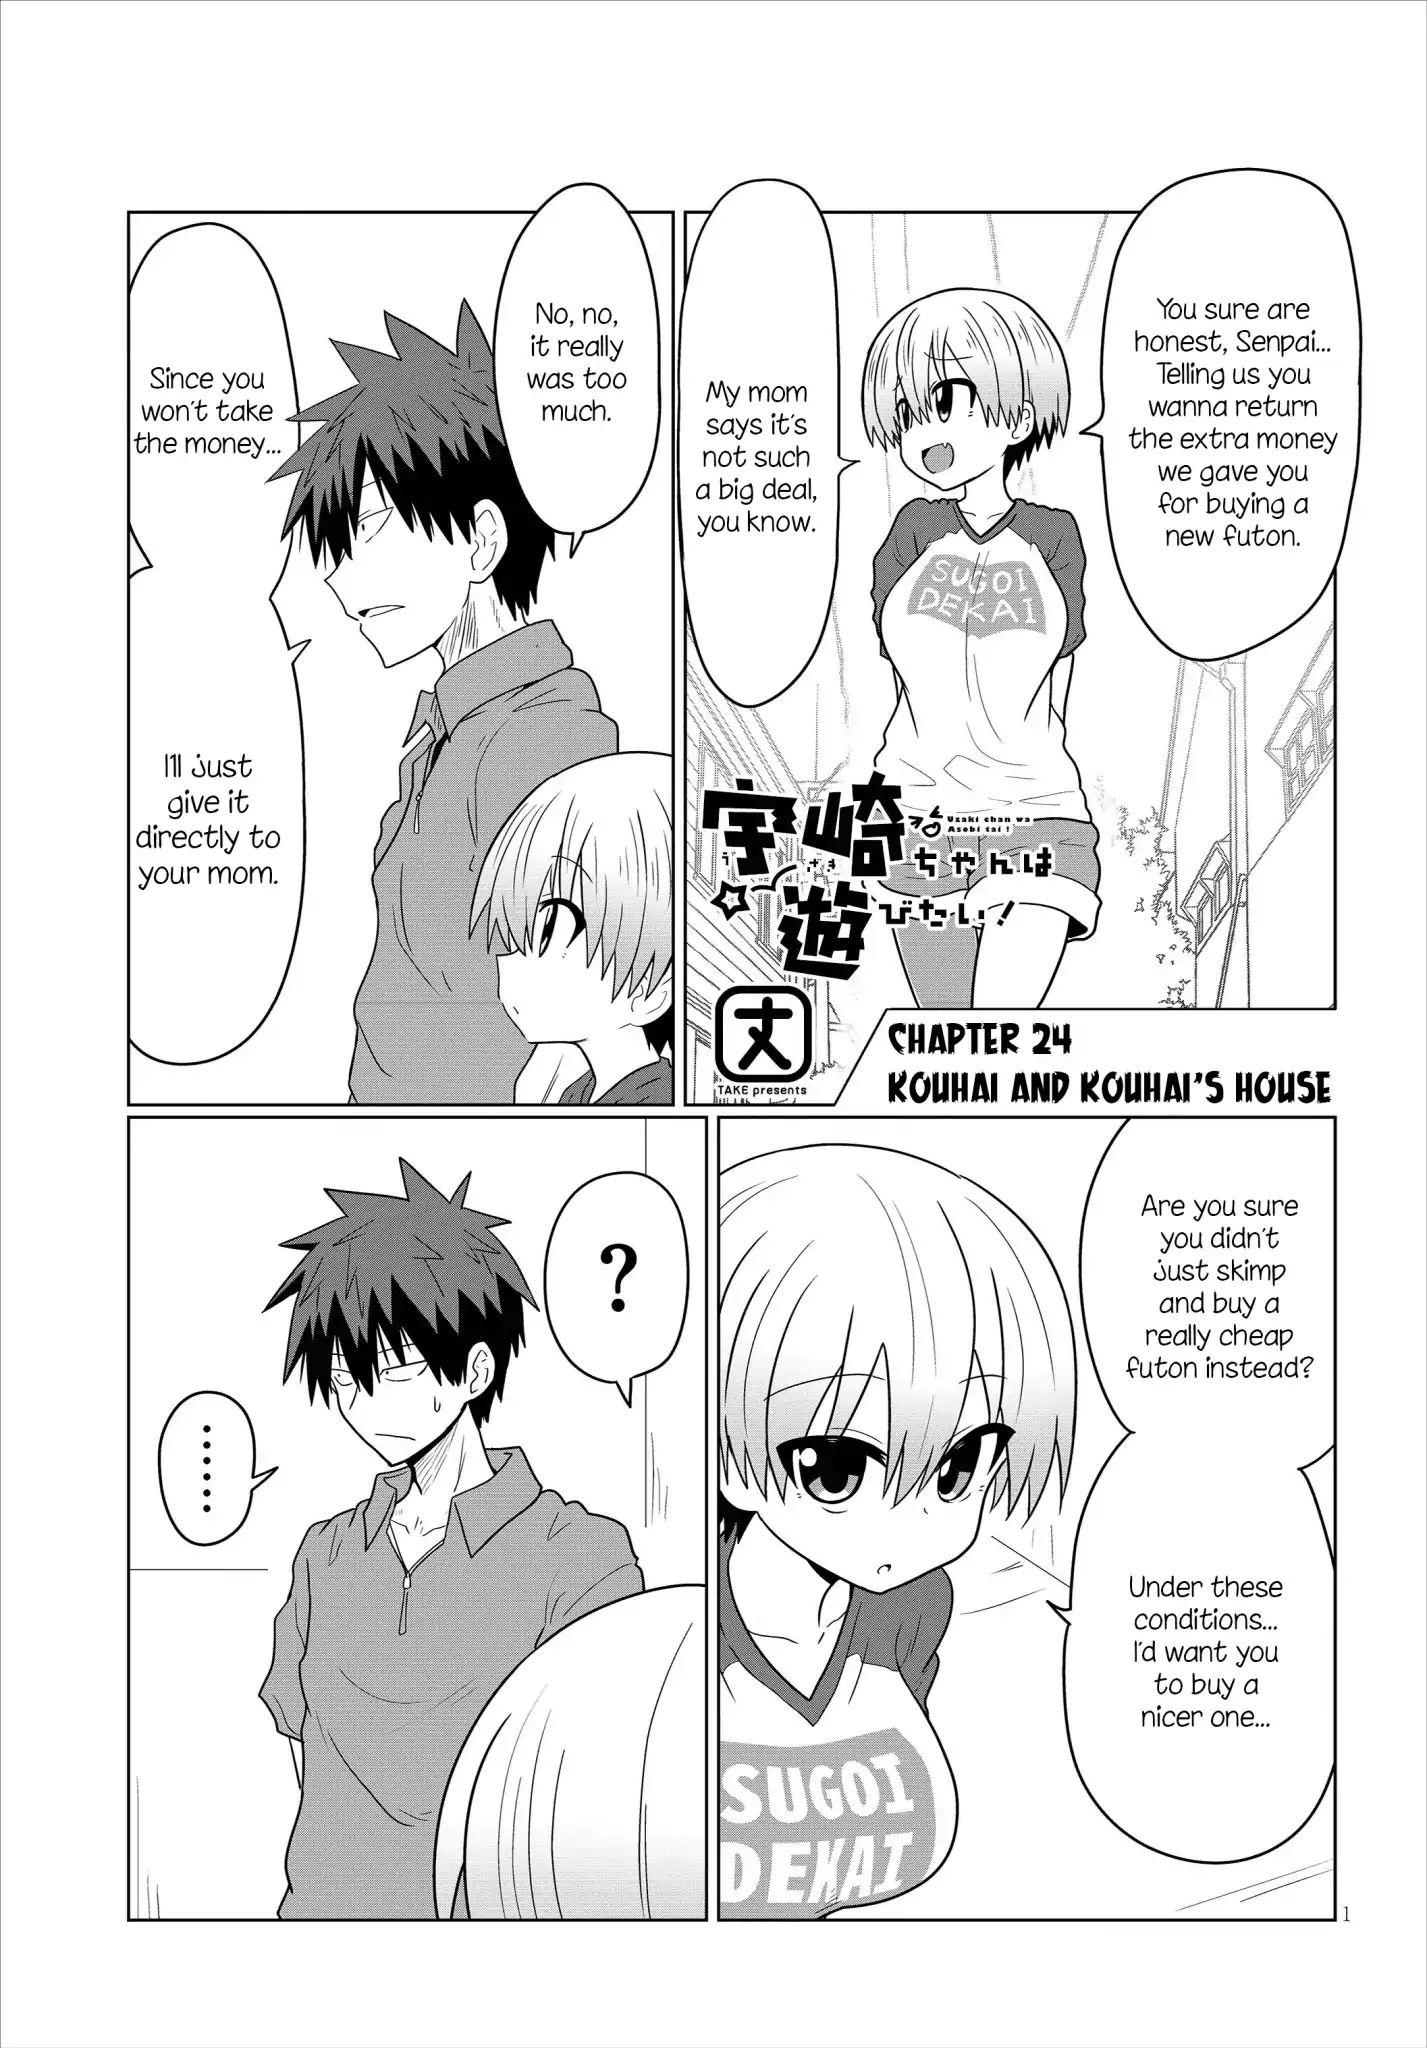 Read uzaki chan manga